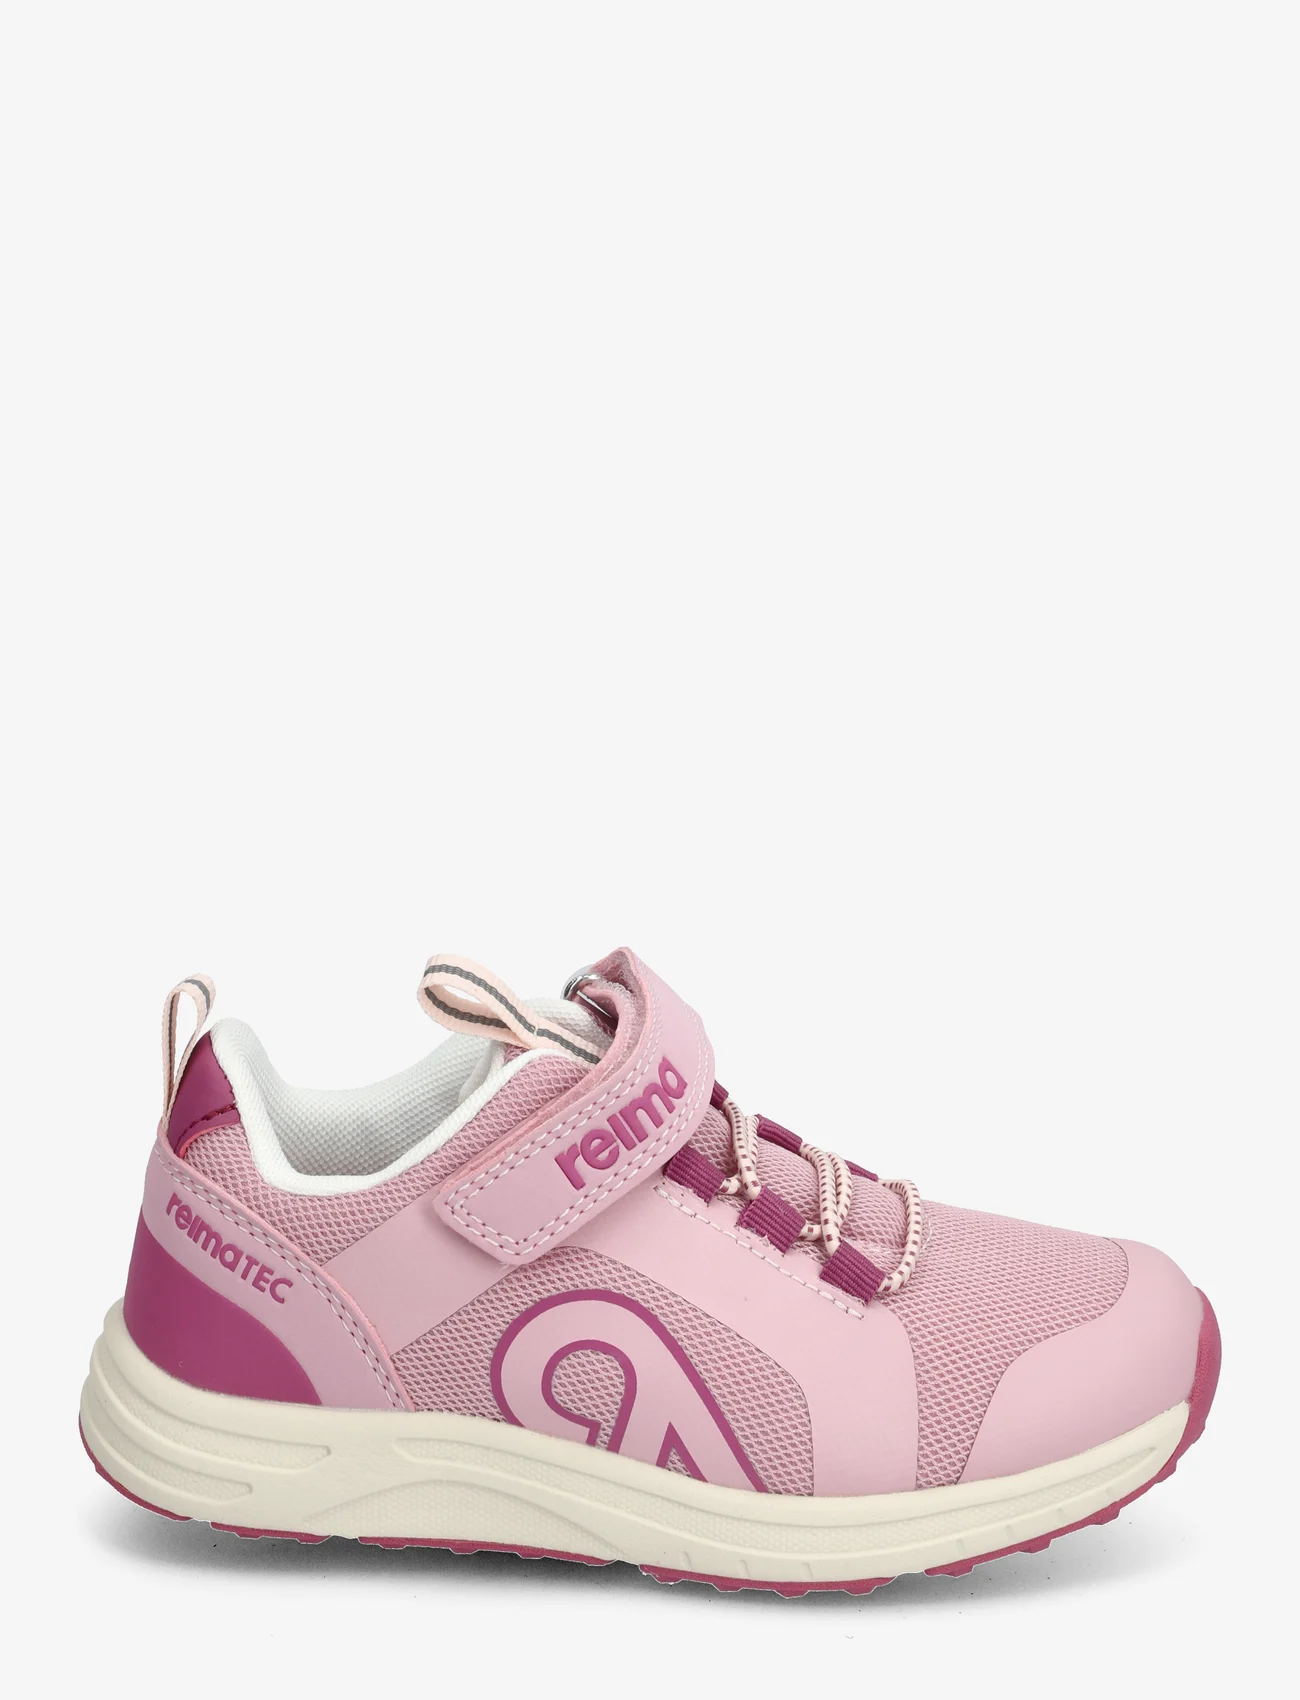 Reima - Reimatec shoes, Enkka - lapsed - grey pink - 1